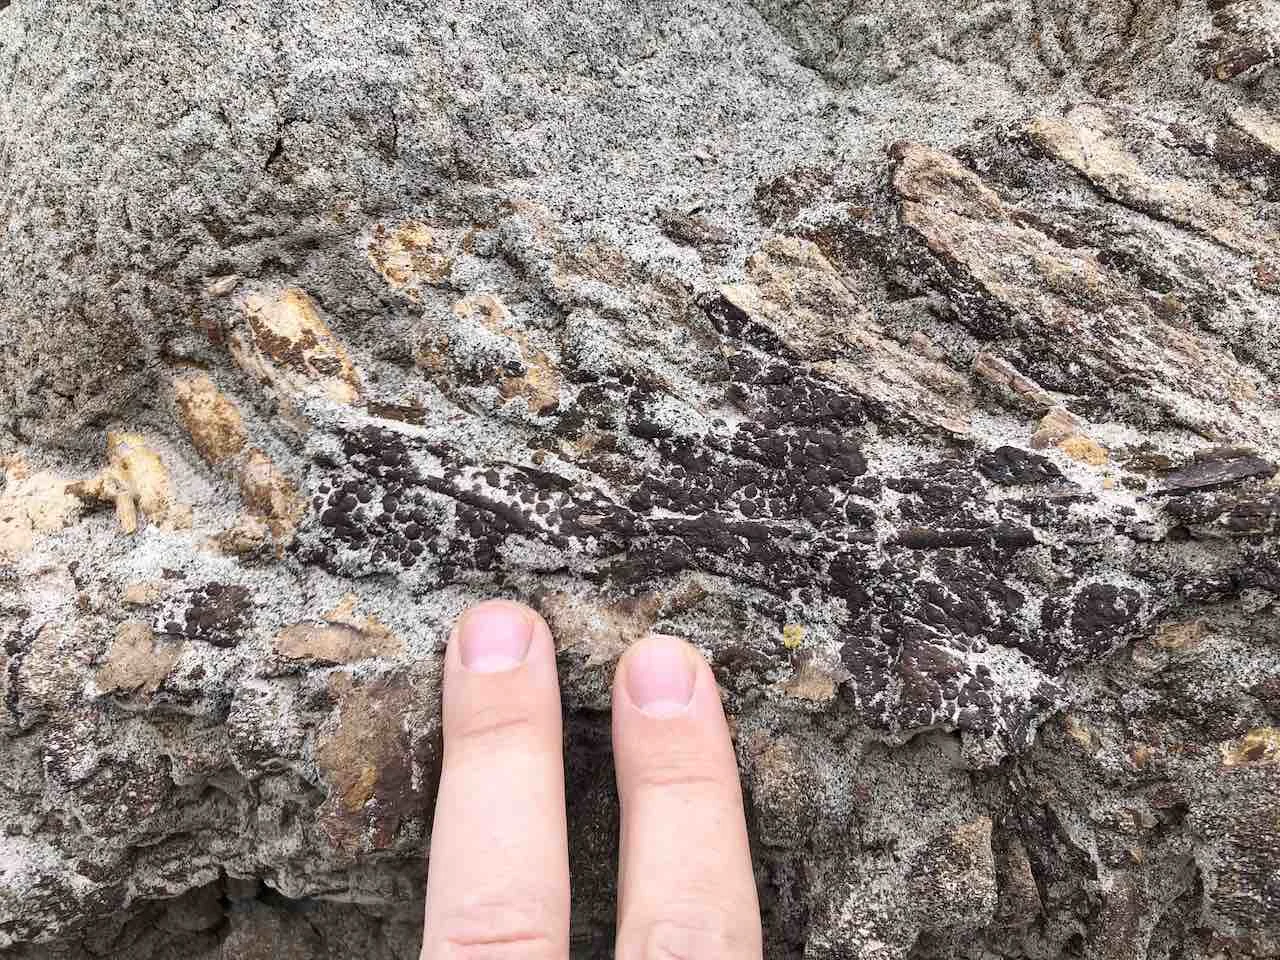 Surprising find of rare fossil with skin excites scientific community